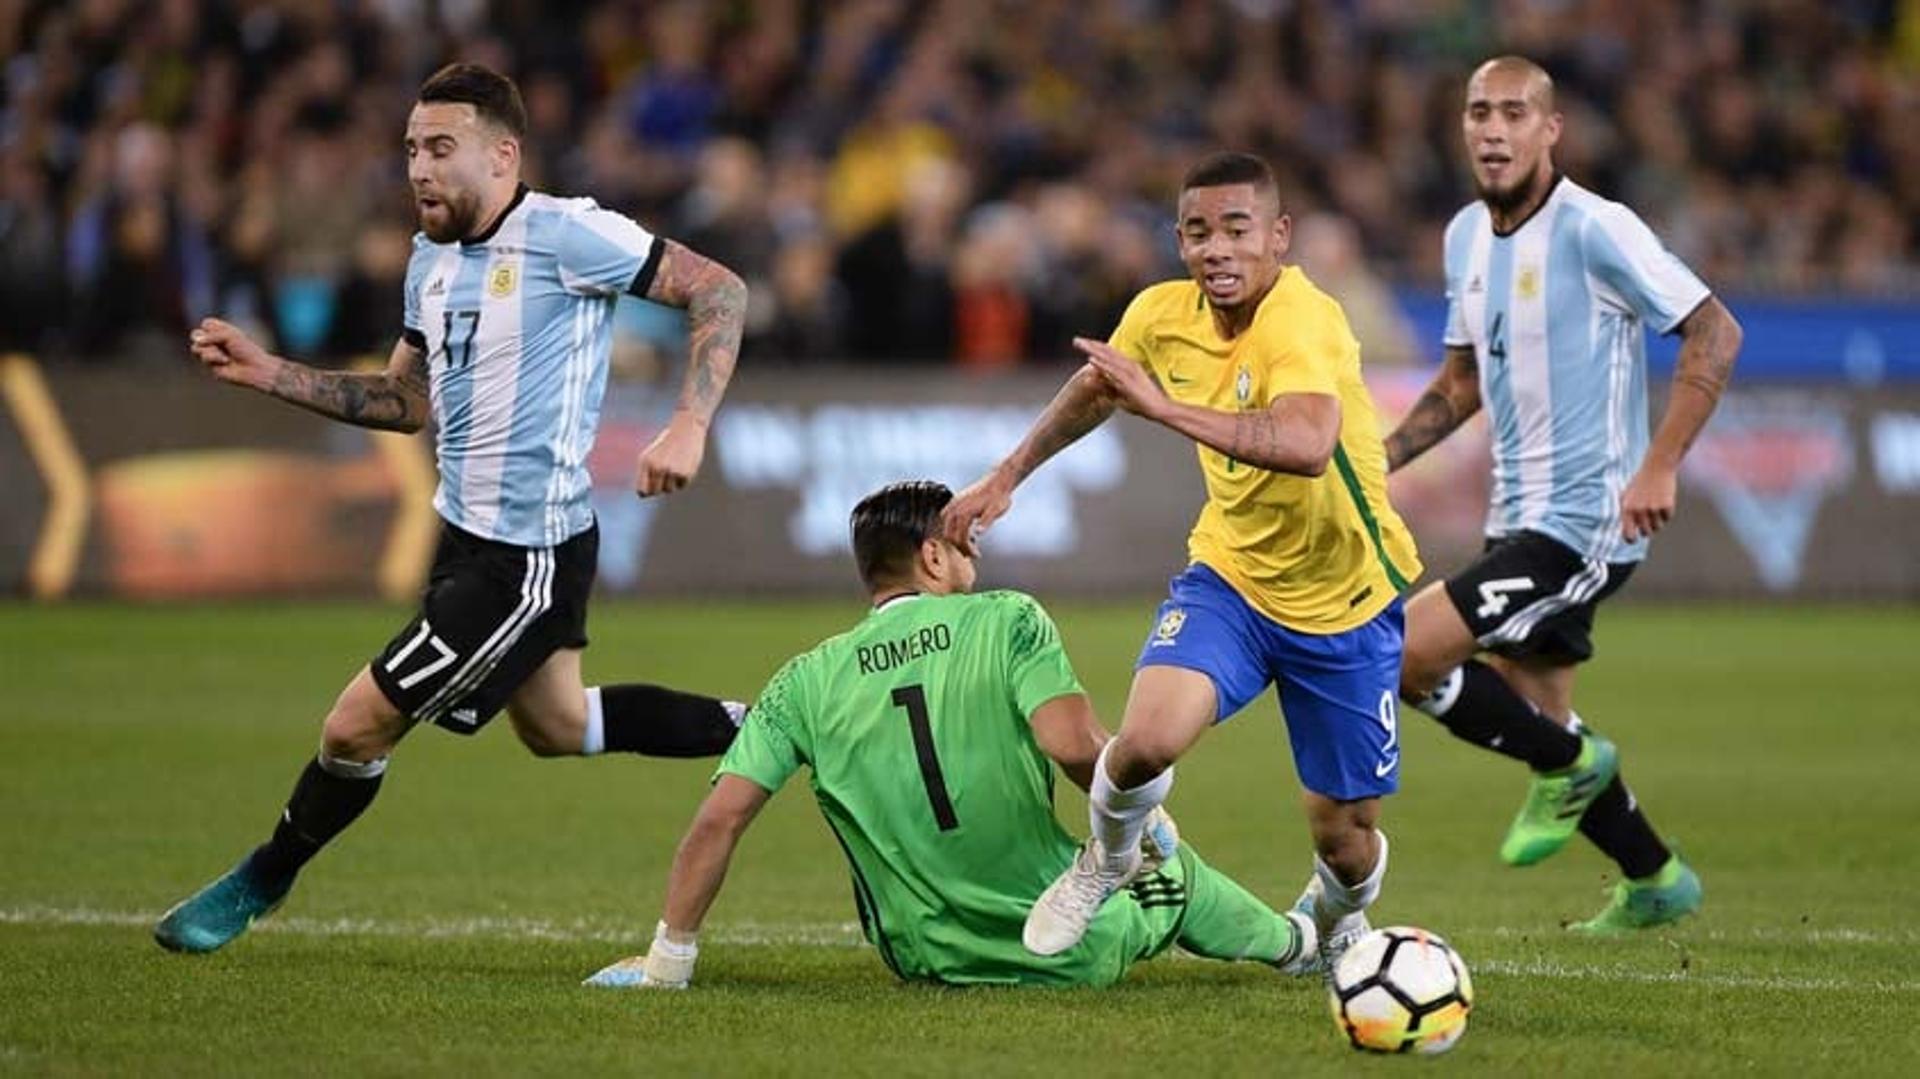 Brasil 0 x 1 Argentina - 9/6/2017